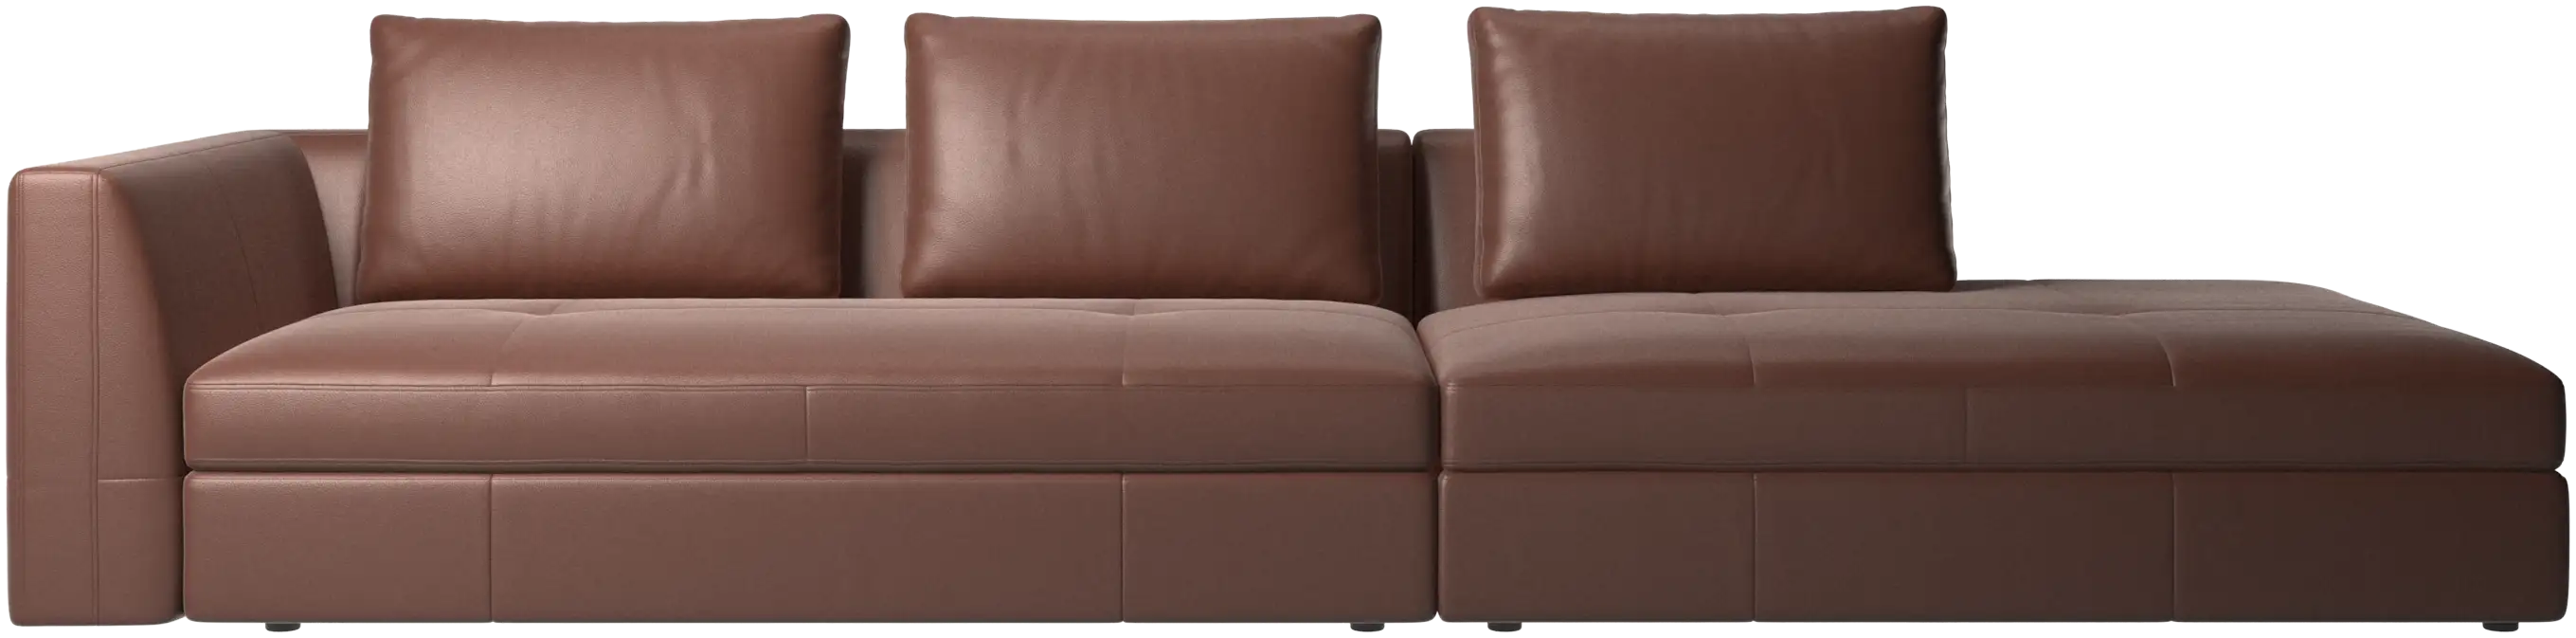 Bergamo sofa with lounging unit